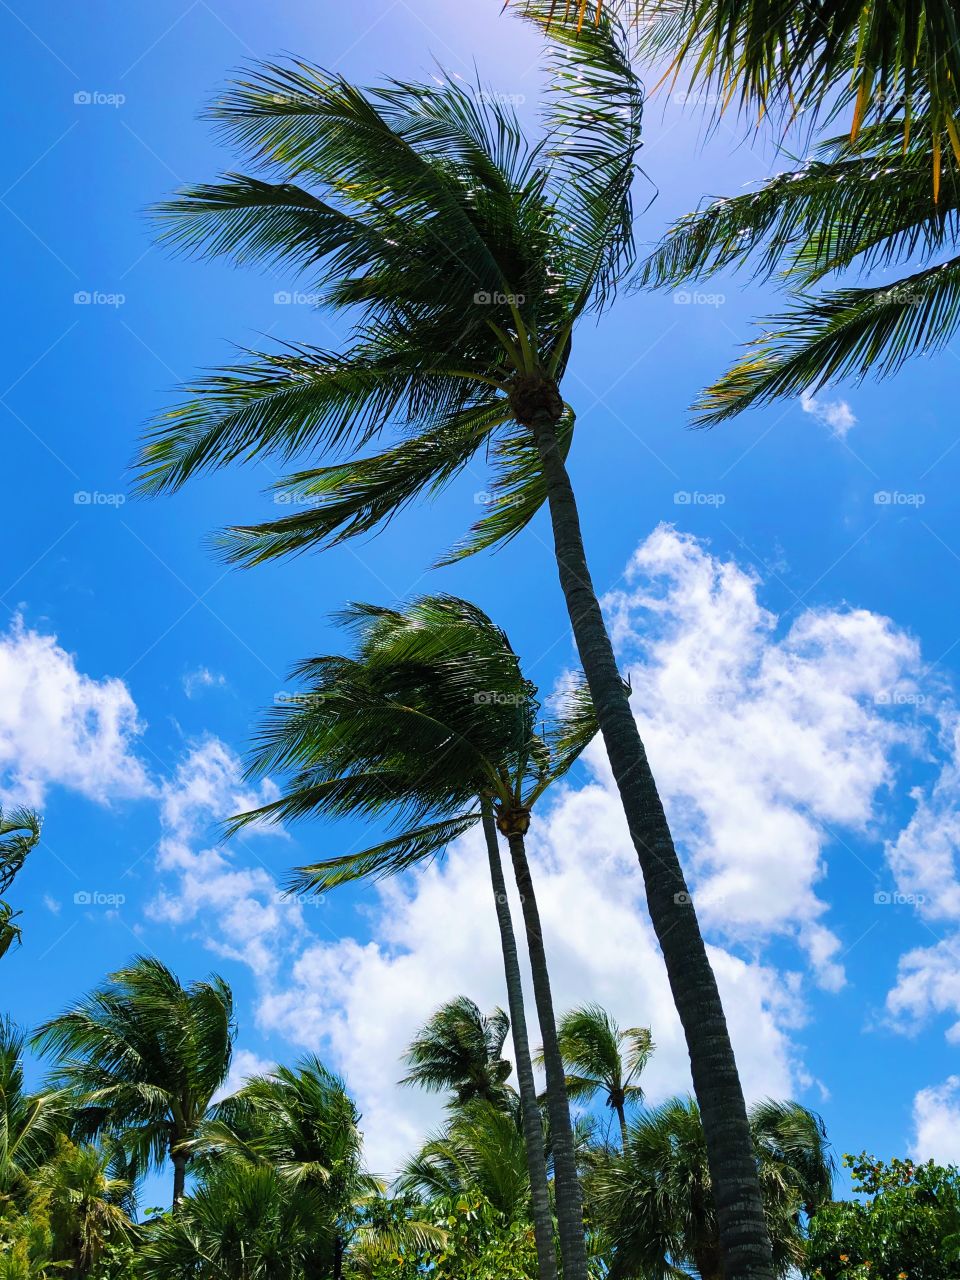 Windy palm trees